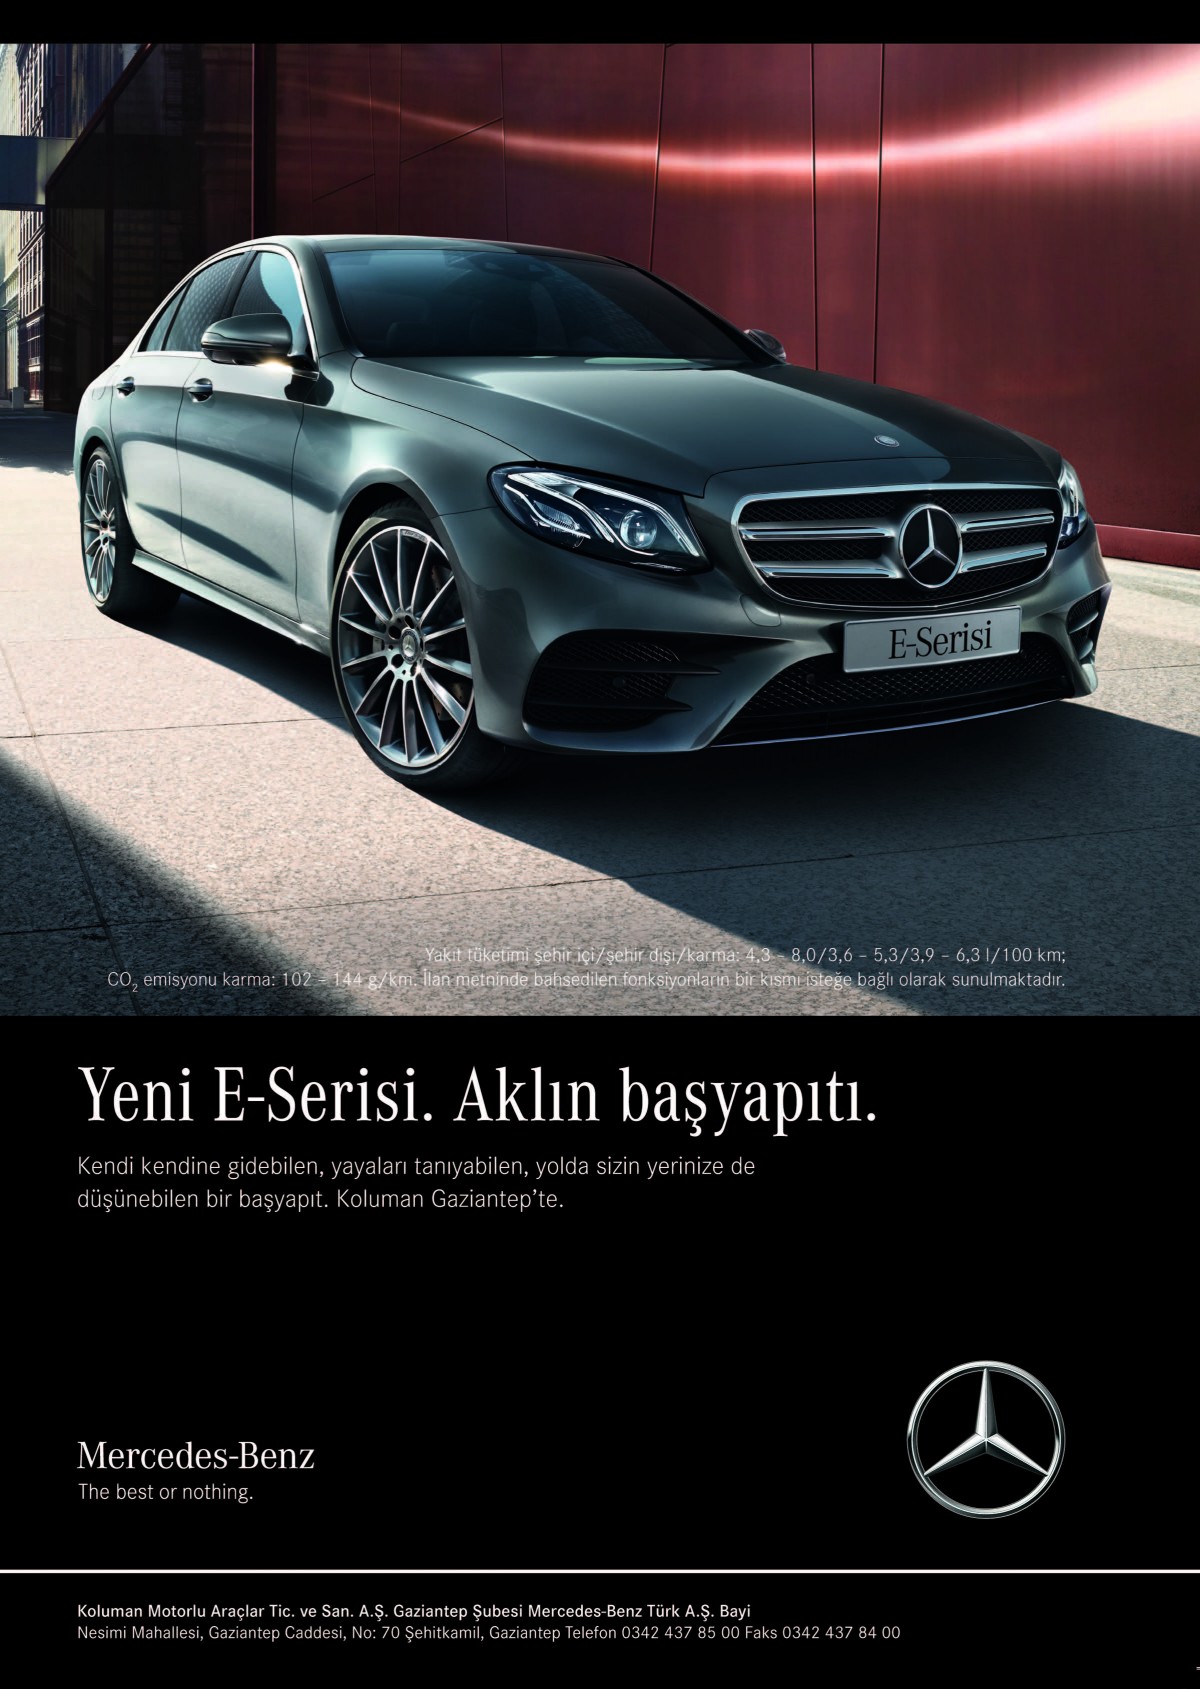 Mercedes текст. Mercedes e class 2020. Реклама Мерседес. Рекламный слоган Мерседес. Реклама автомобилей в журналах.